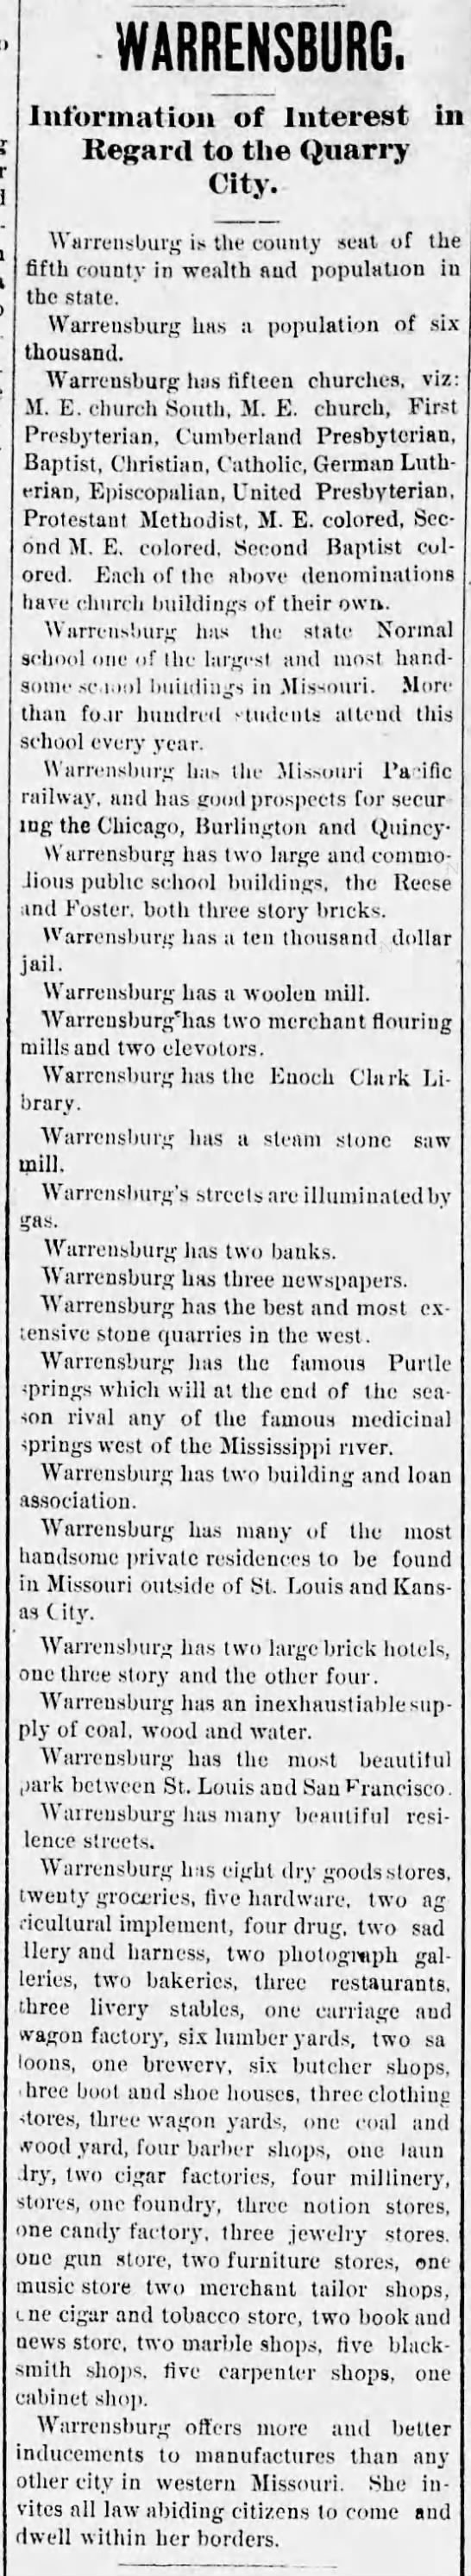 warrensburg information of 1886 - 